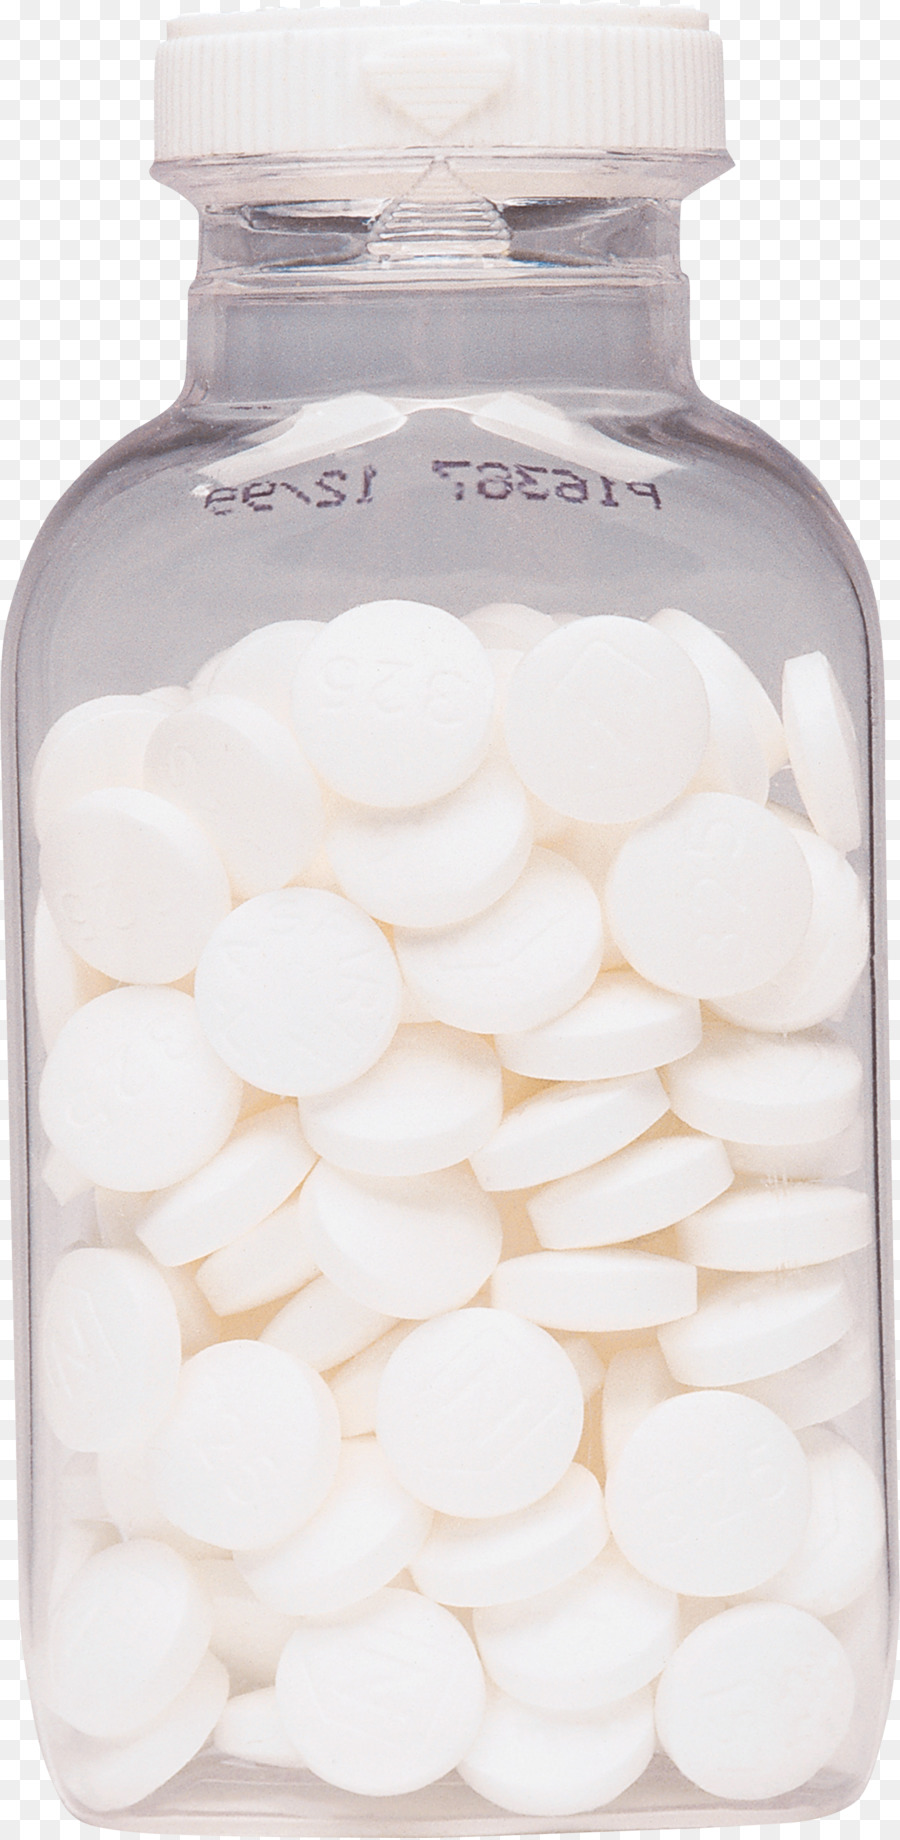 Aspirin Fotografie Clip-art - andere